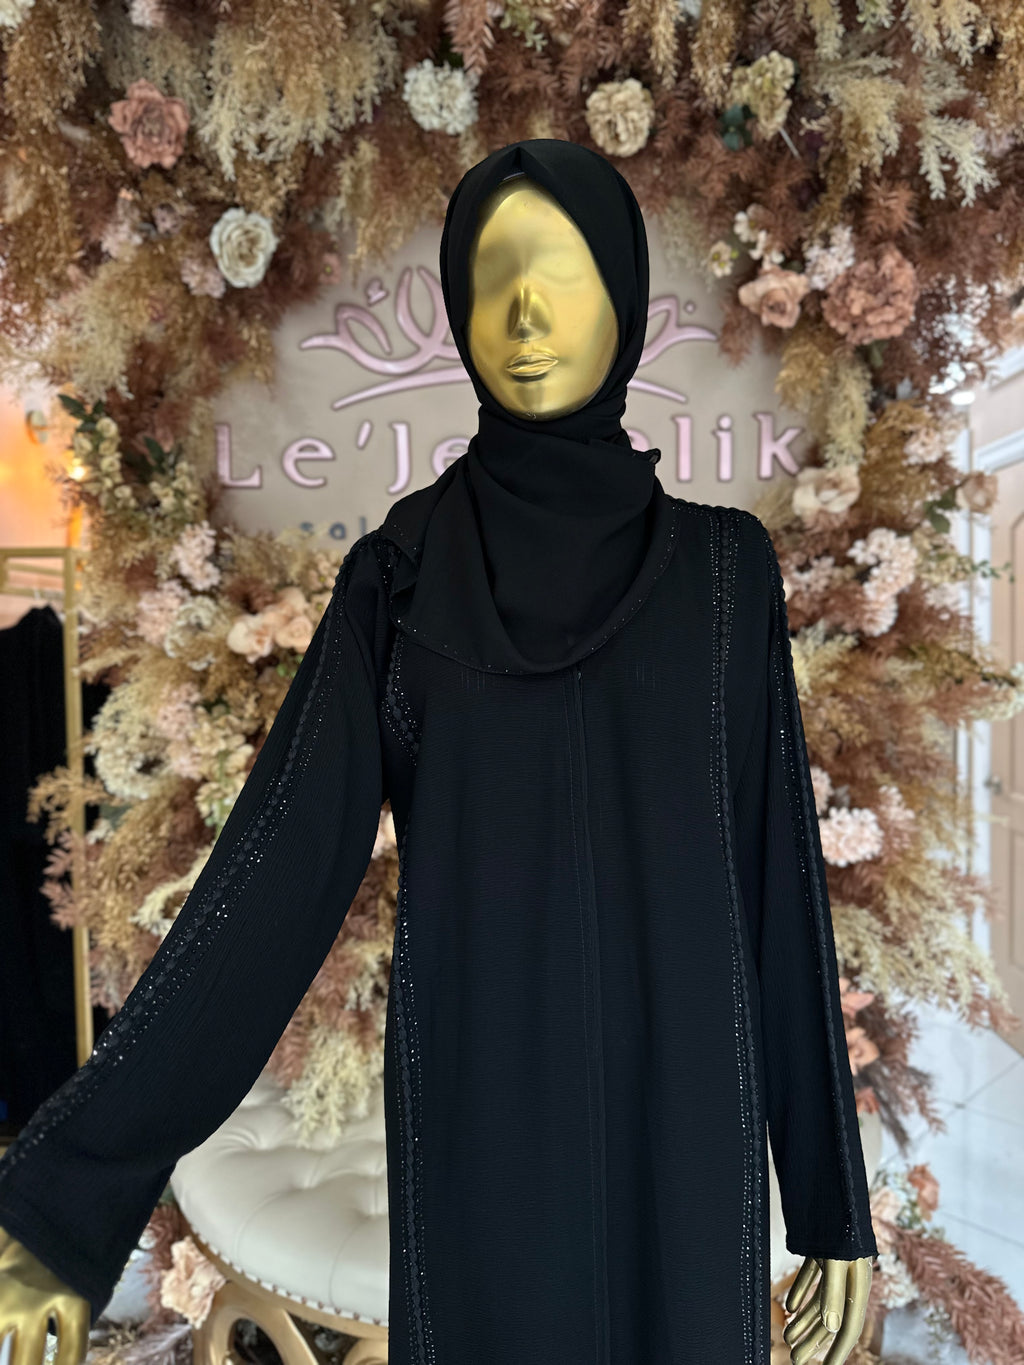 Braided Rhinestone Abaya with matching Hijab